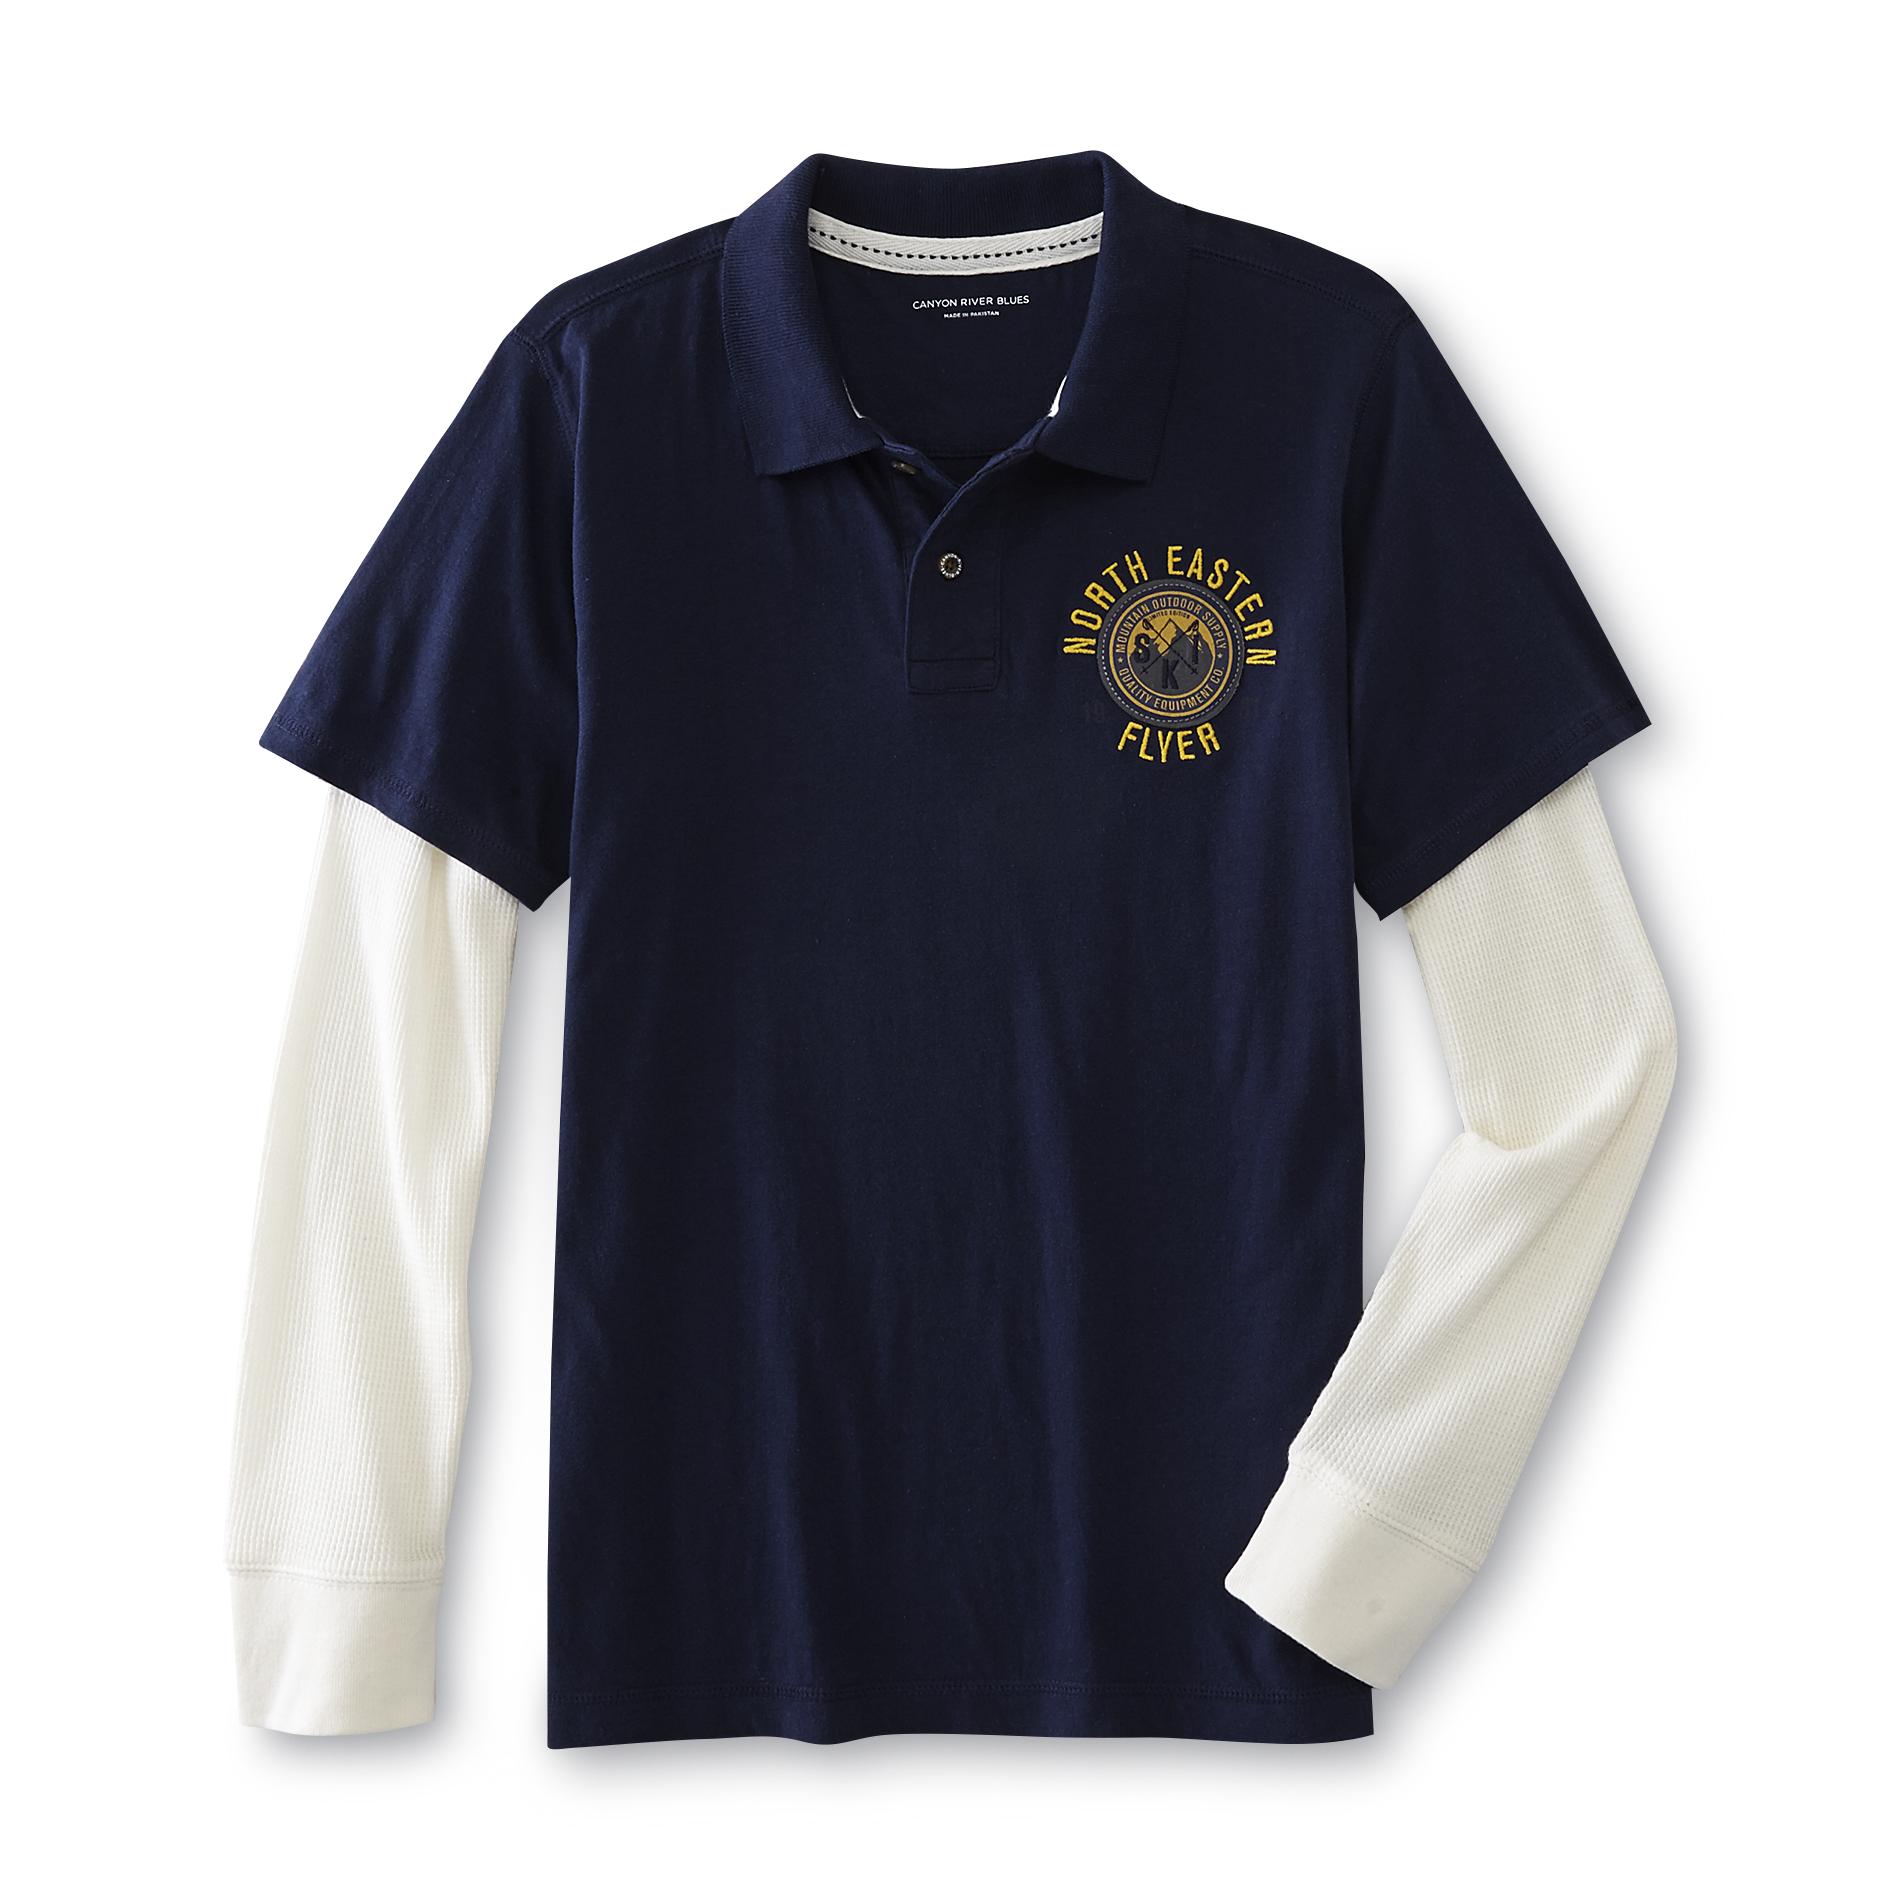 Canyon River Blues Boy's Layered-Look Polo Shirt